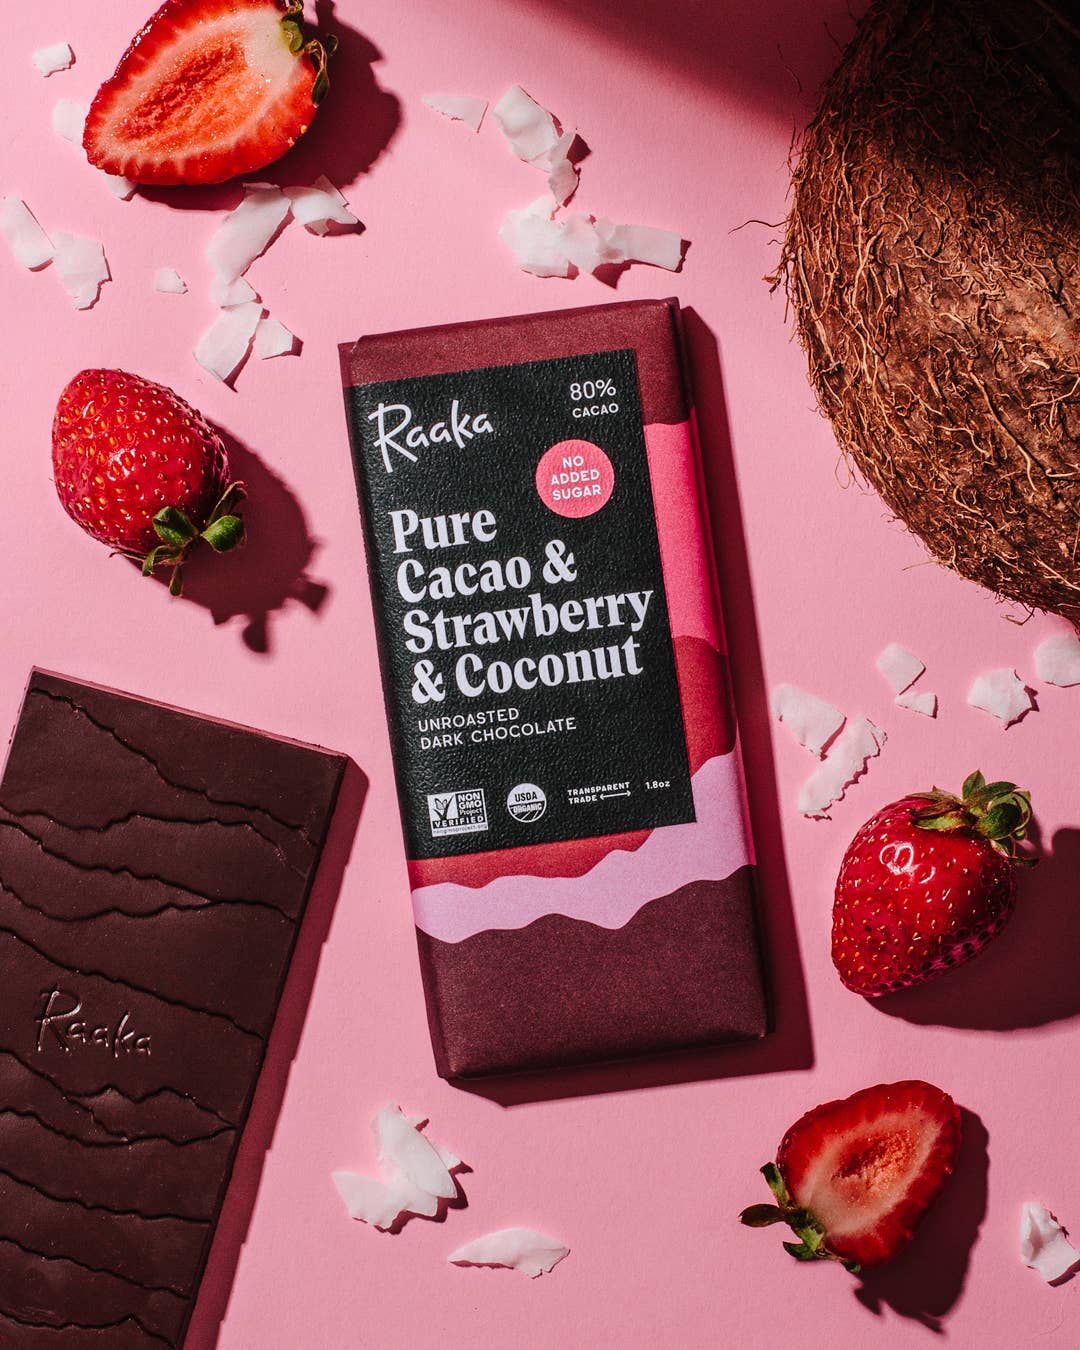 Raaka Chocolate - 80% Pure Cacao & Strawberry & Coconut (No added sugar)  Raaka Chocolate   